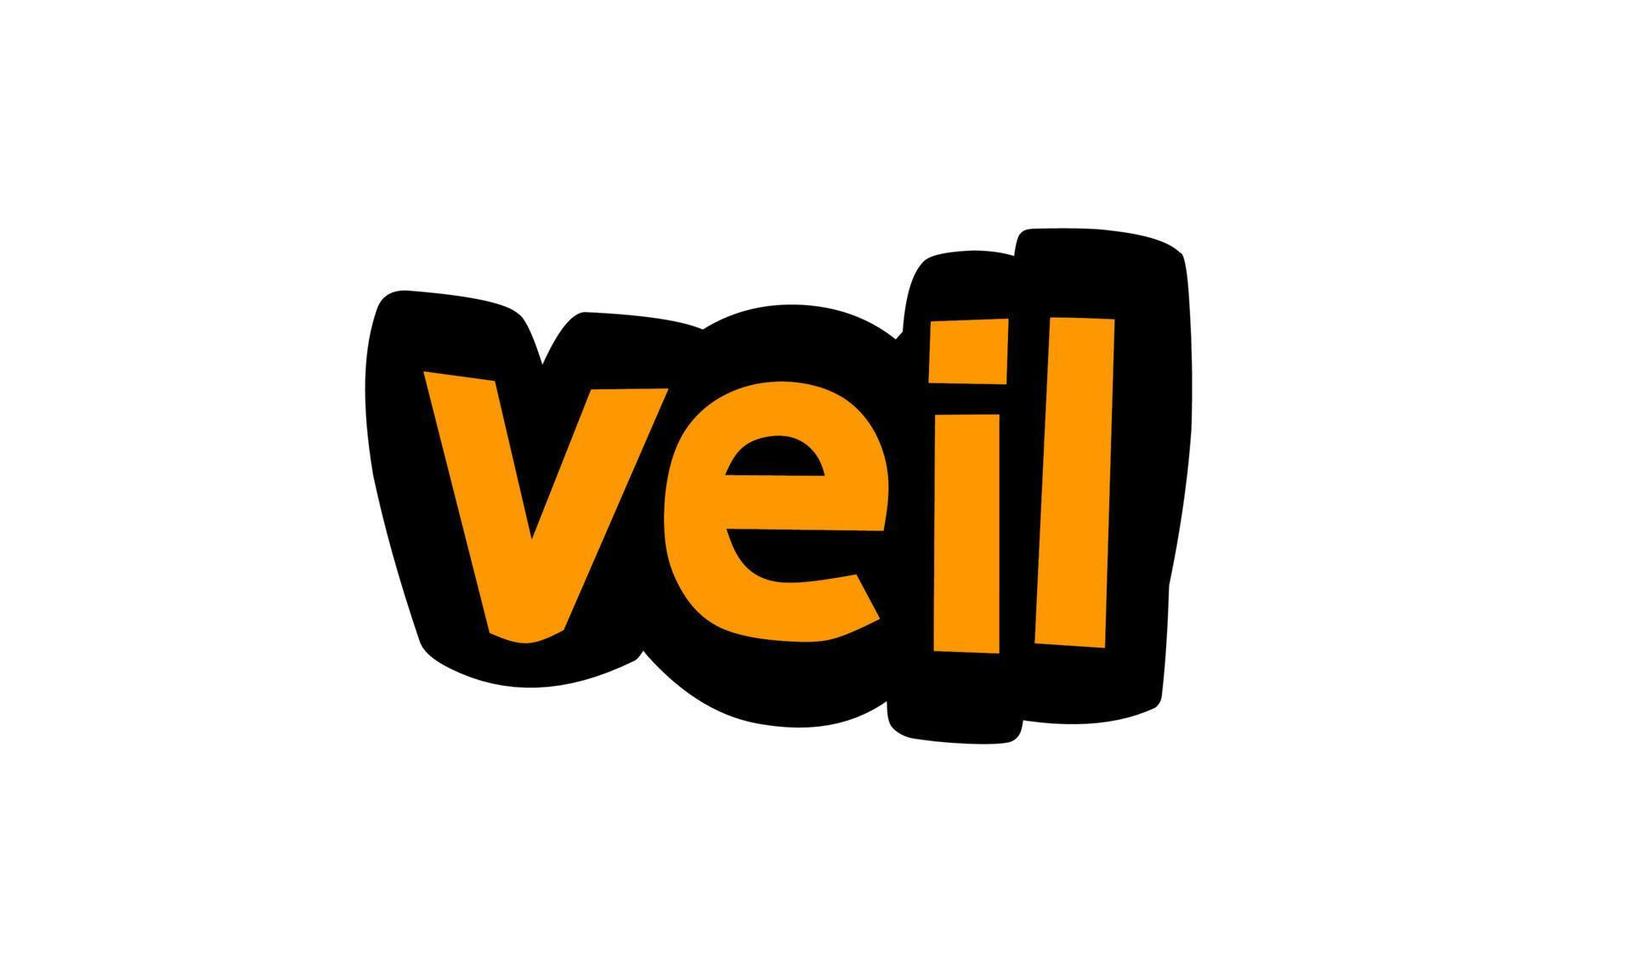 VEIL writing vector design on white background